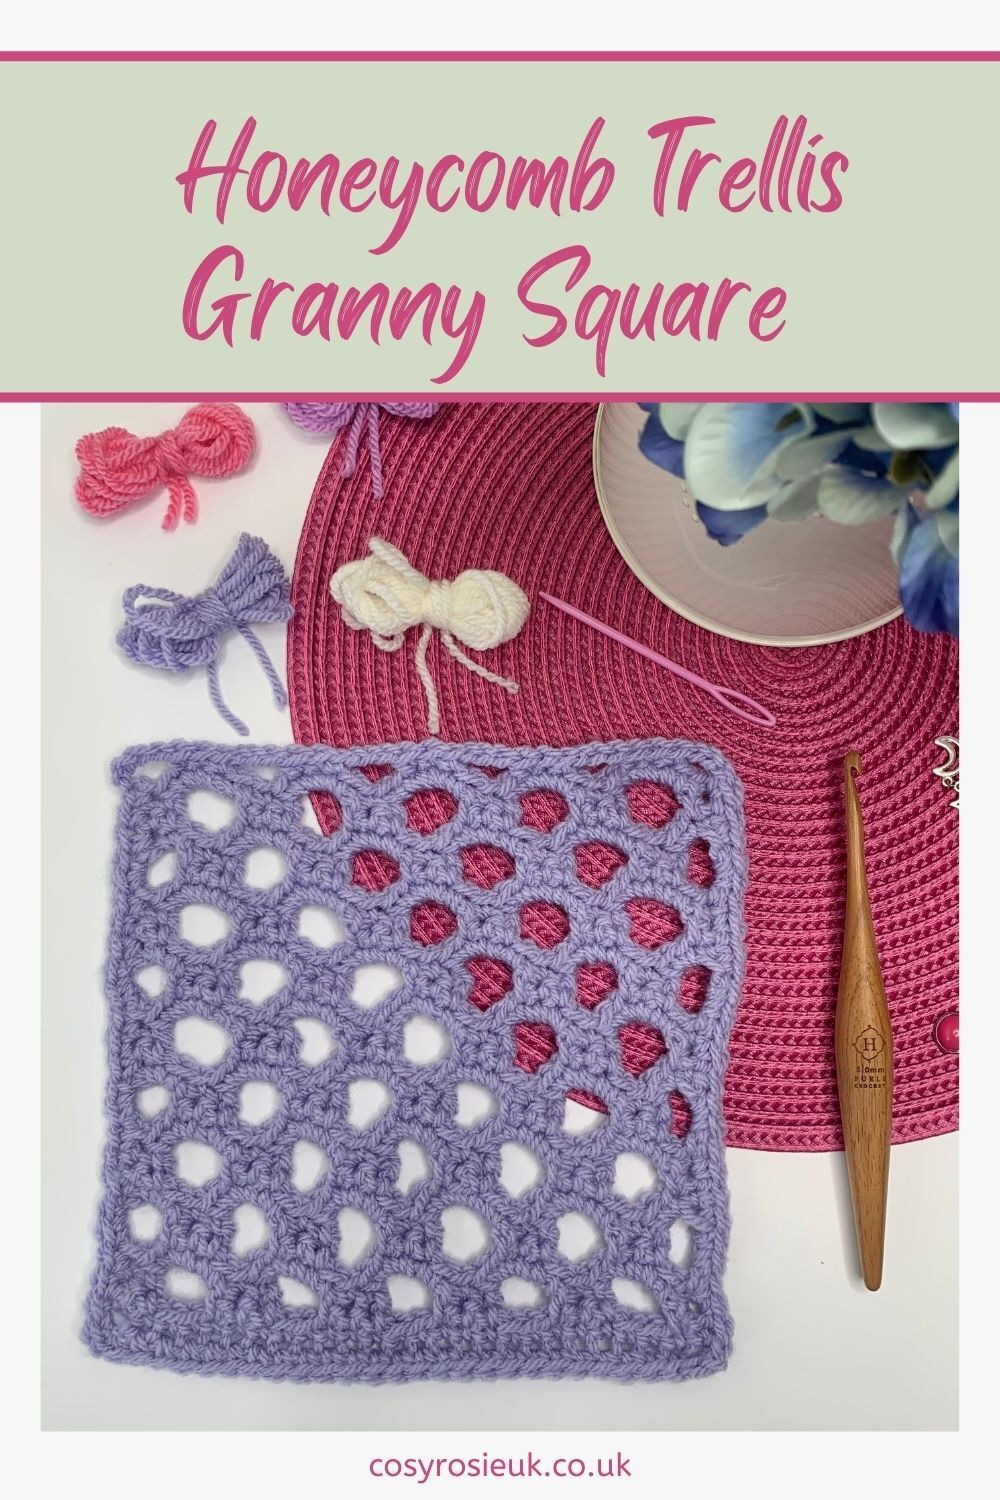 Honeycomb trellis granny square pattern